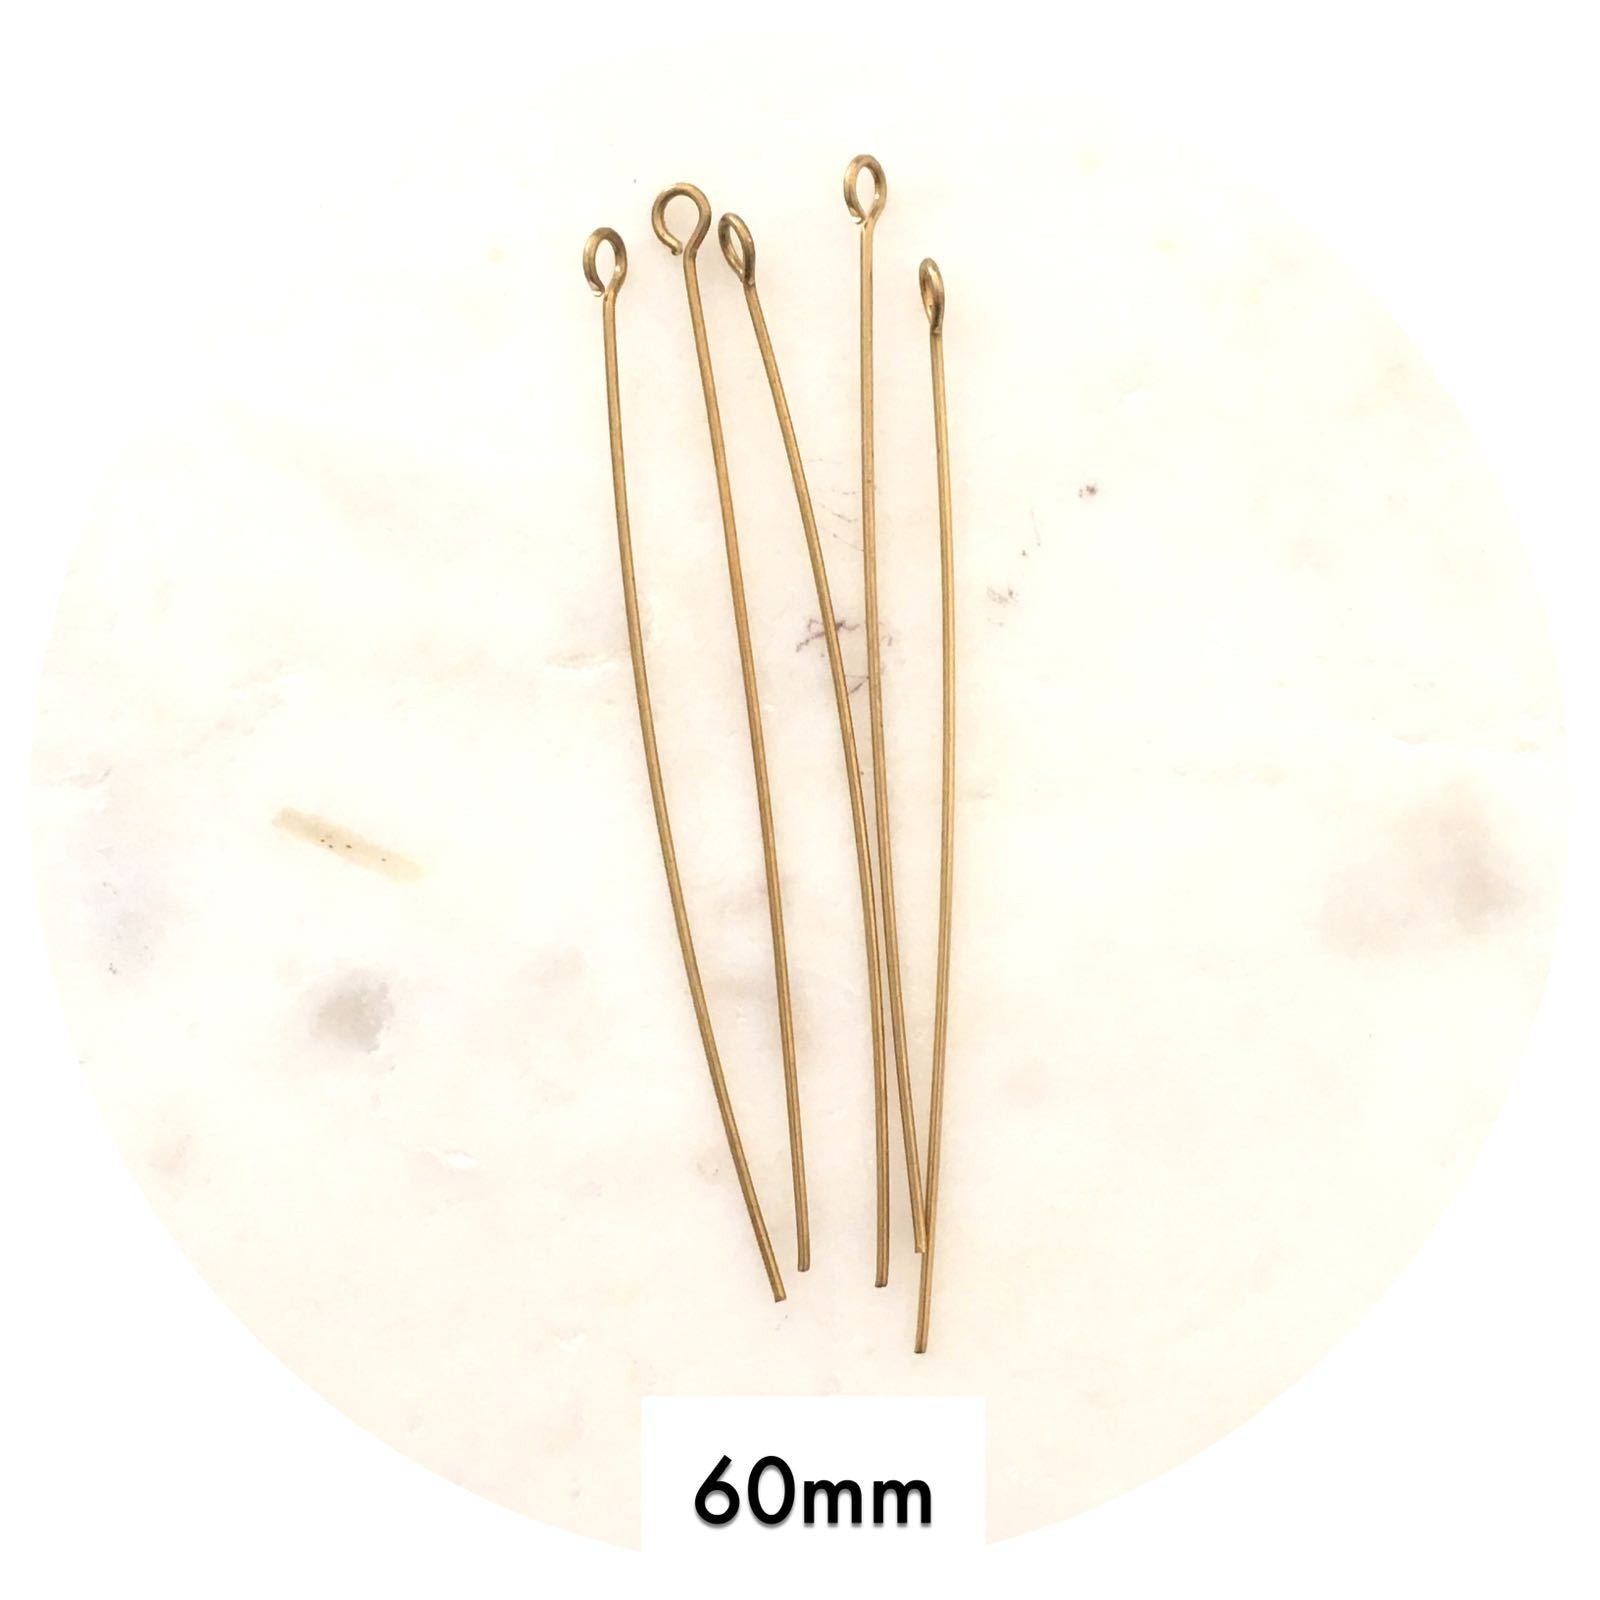 60mm Eye Pins Findings - Raw Brass - 10 pcs - BS1157